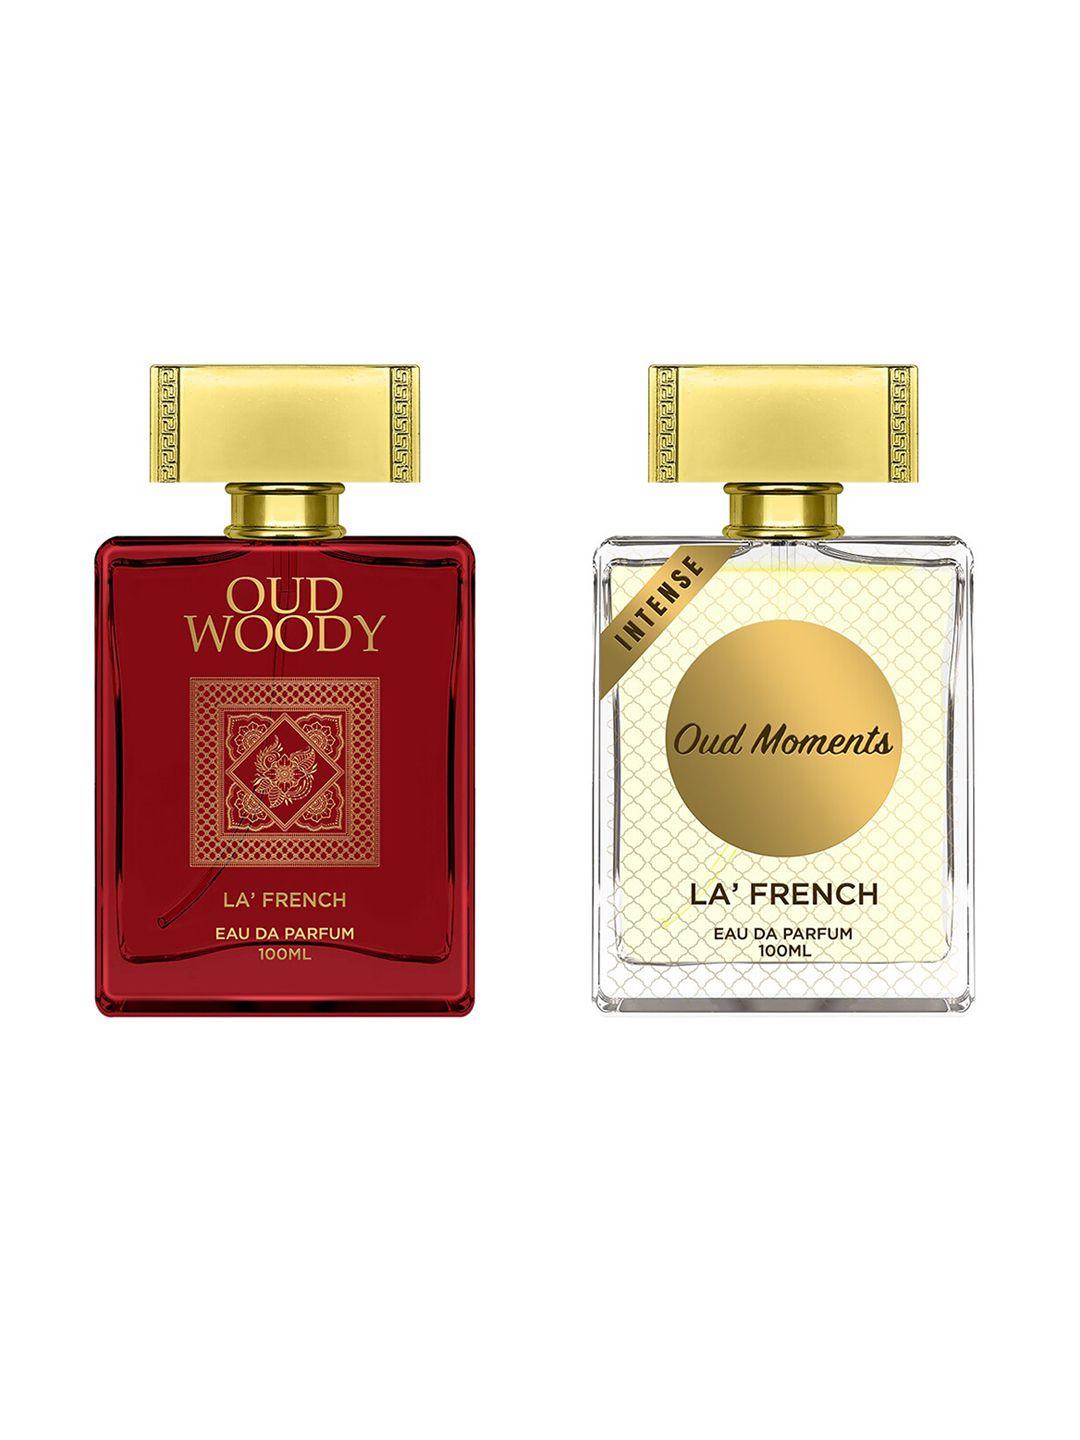 la french set of 2 oud woody & oud moments eau de parfum - 100ml each